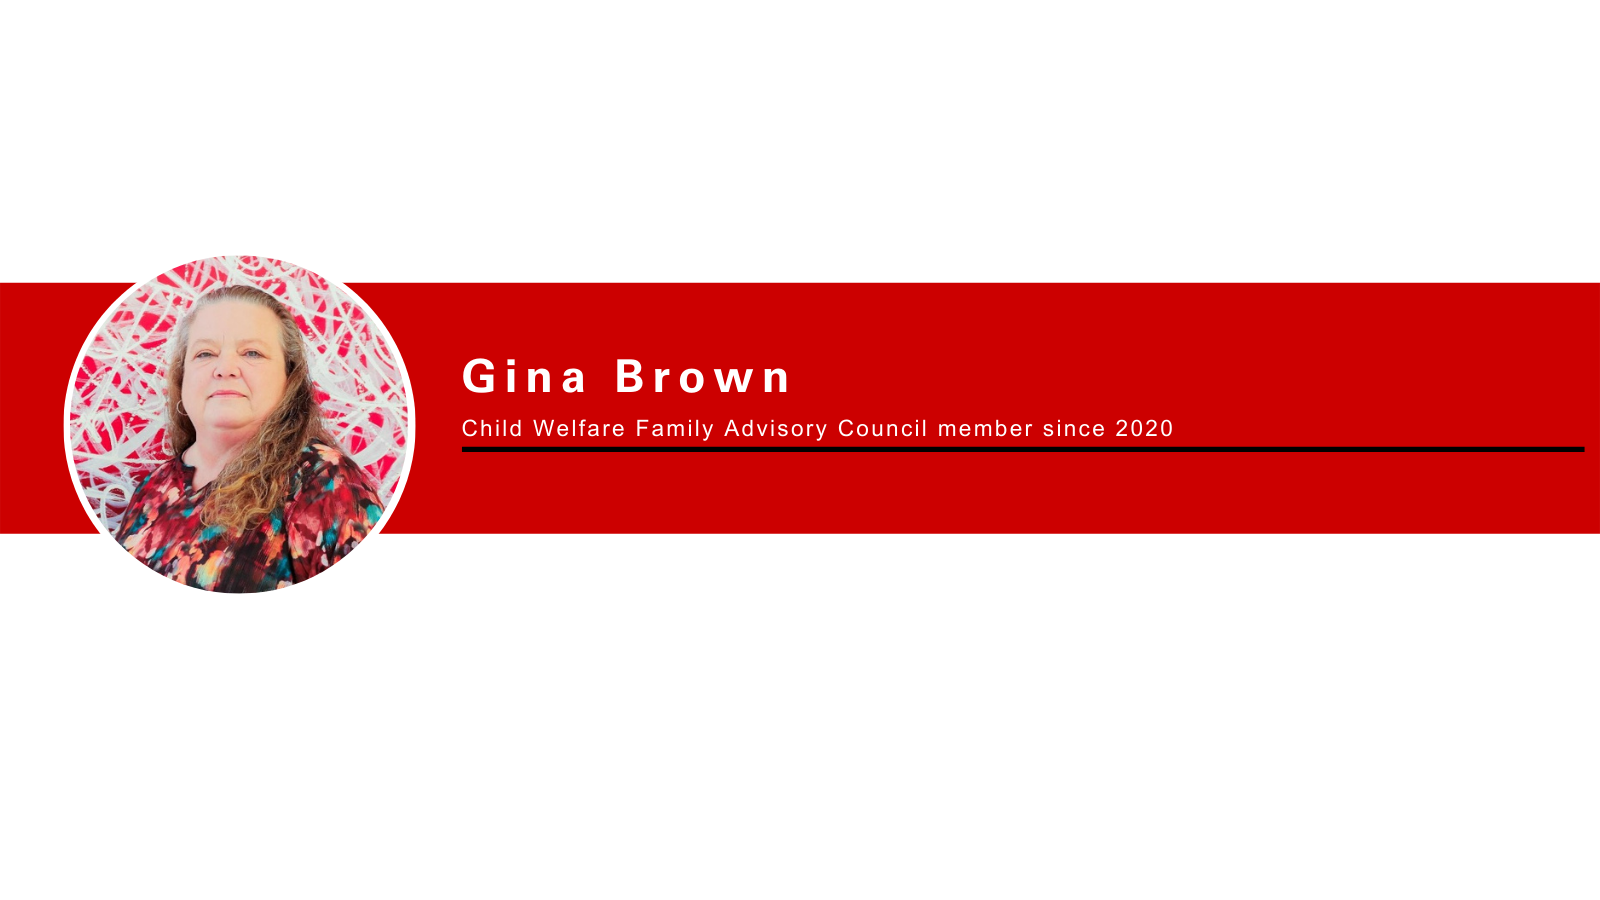 Meet Gina Brown